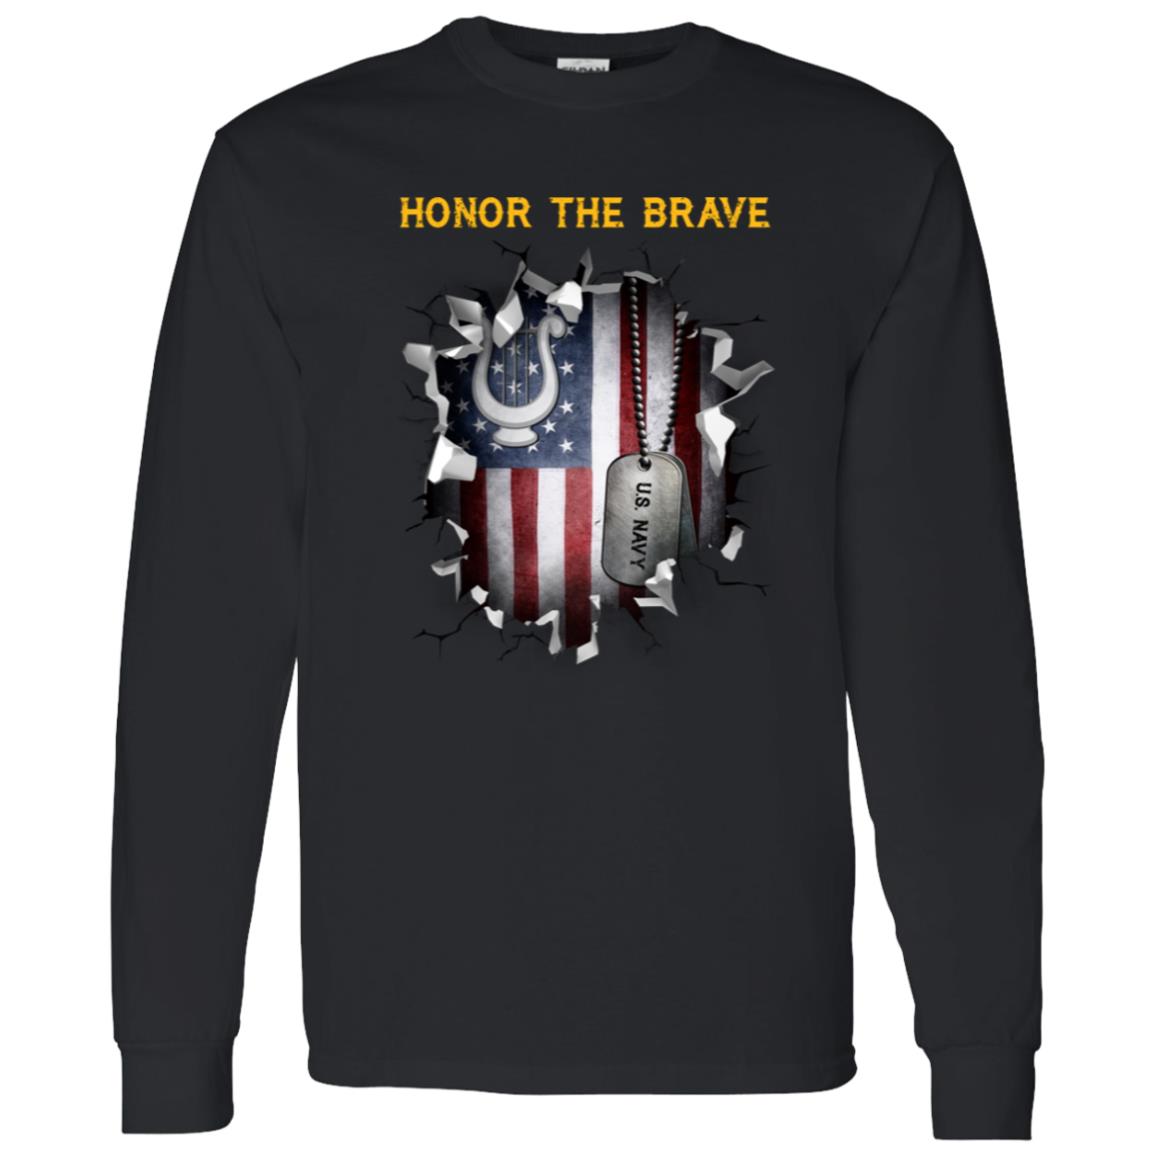 Navy Musician Navy MU - Honor The Brave Front Shirt